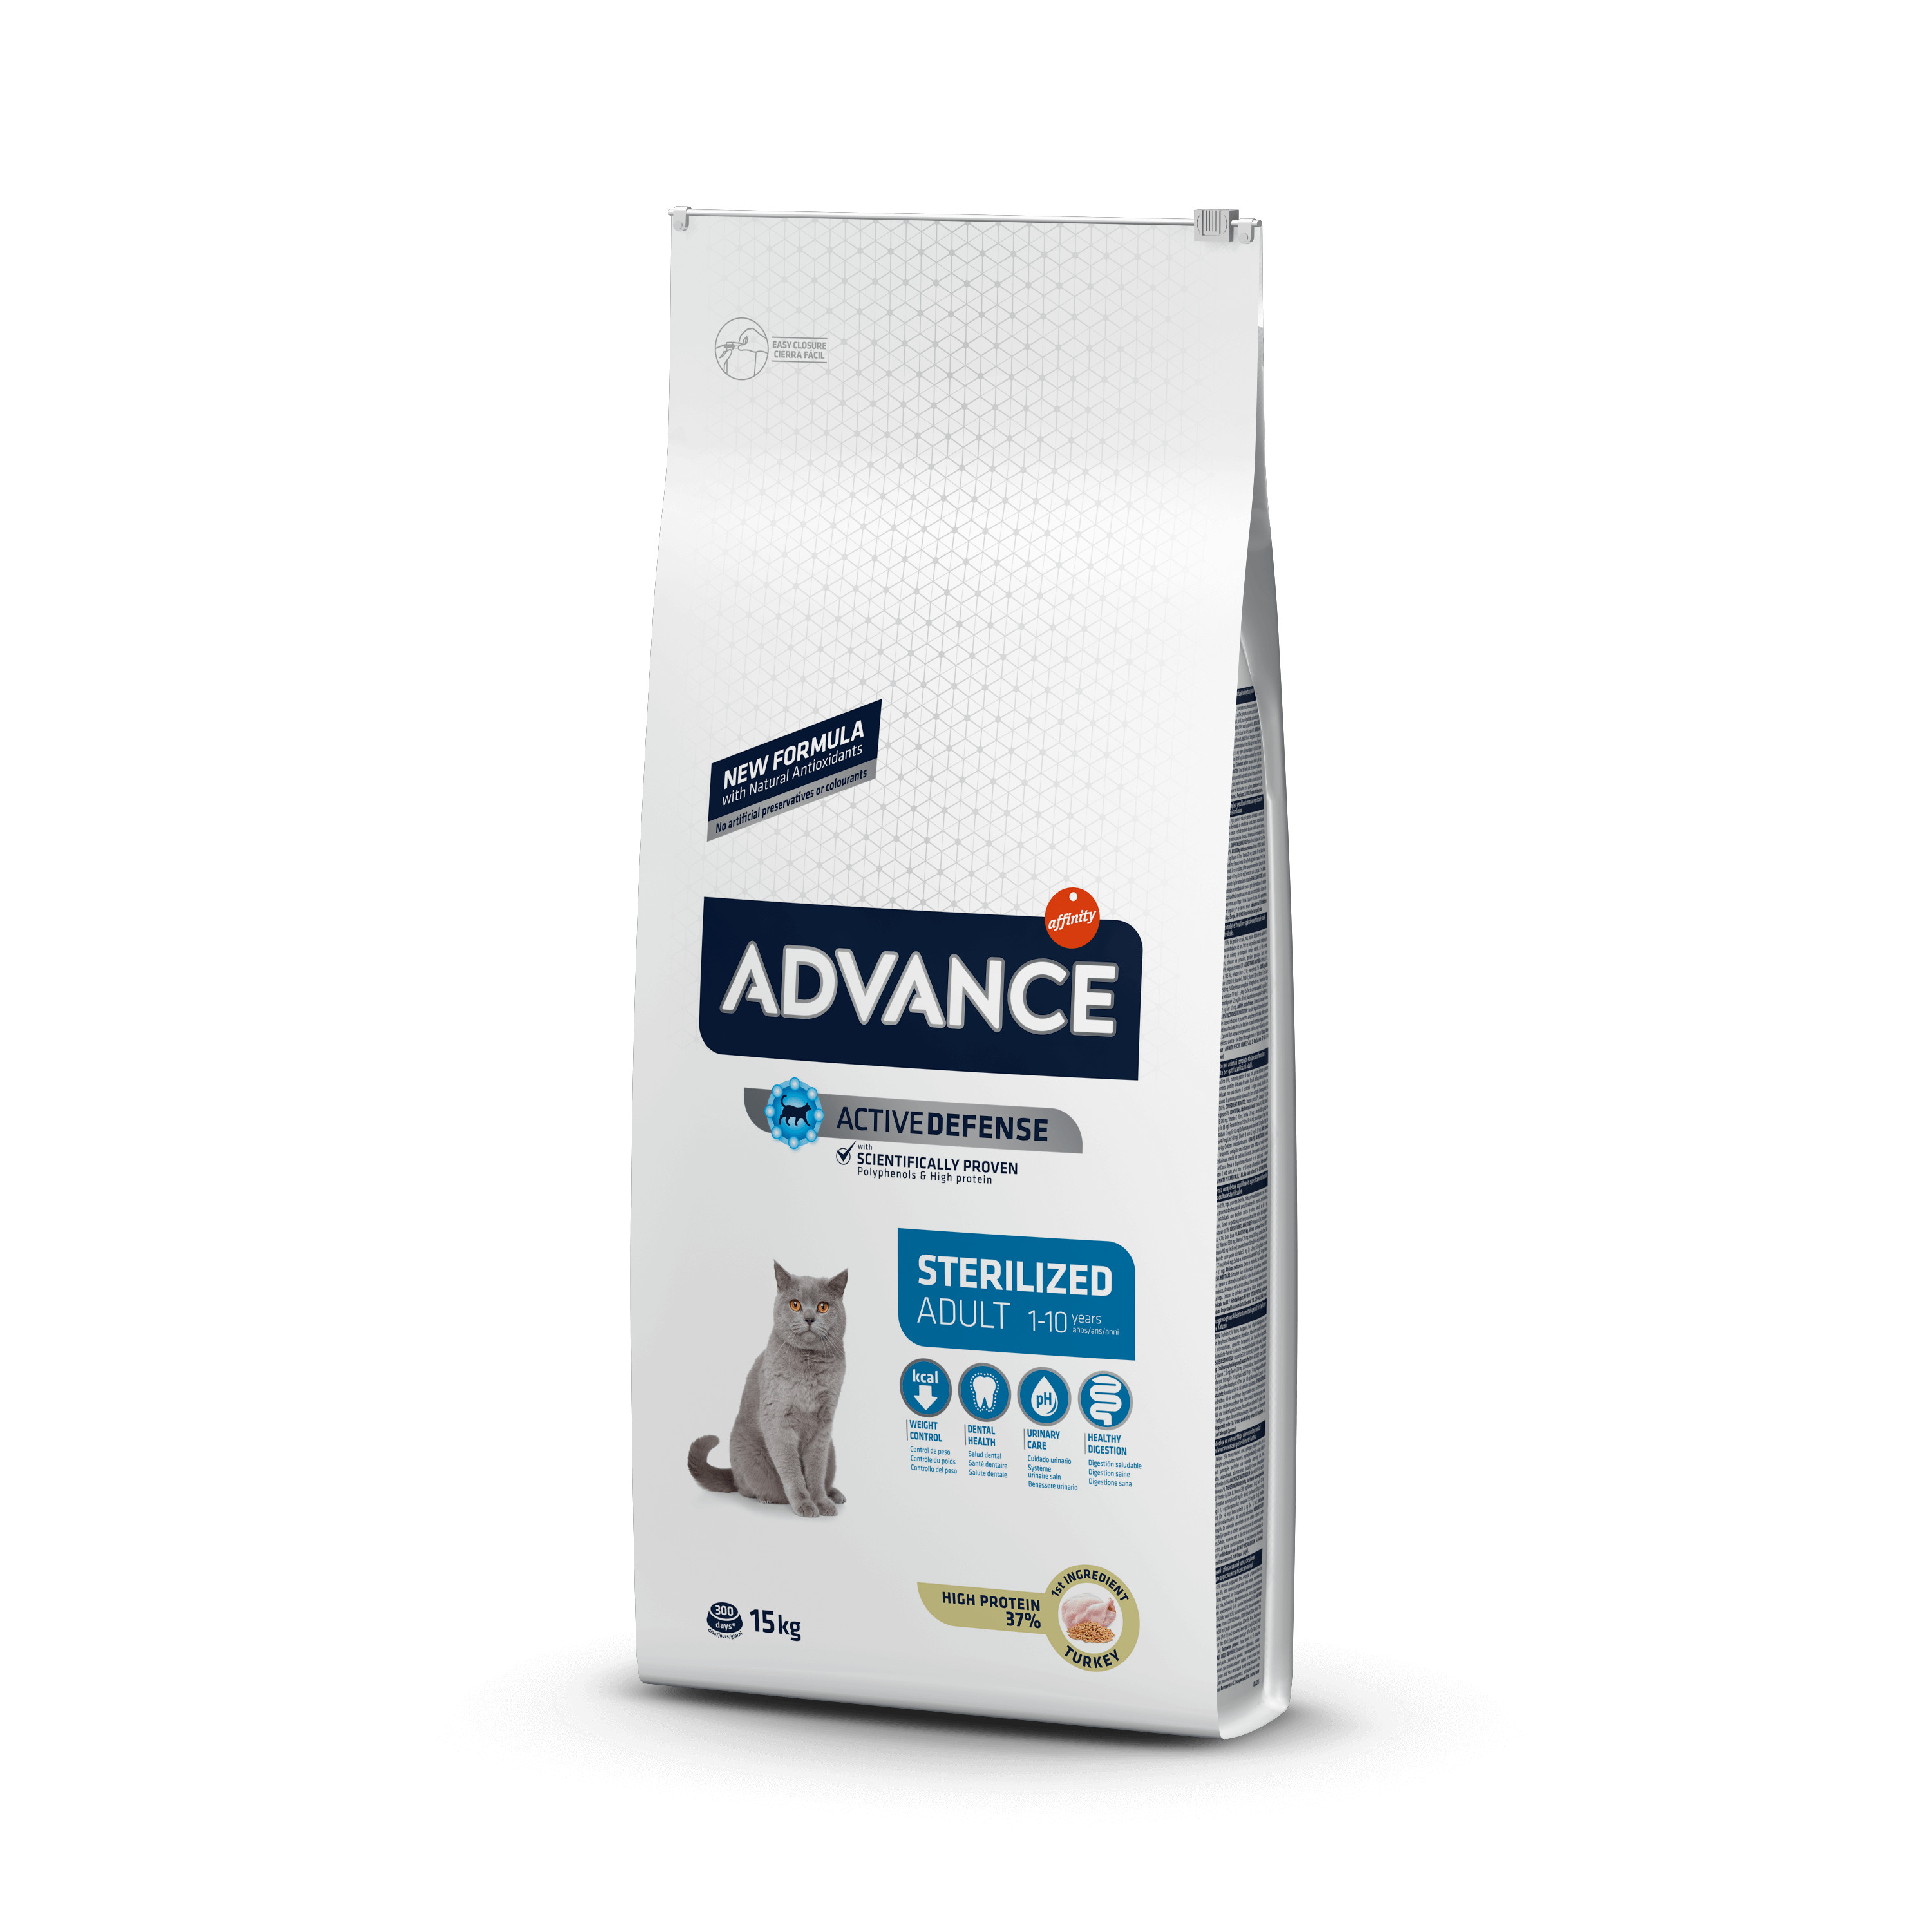 Advance Sterilized High protein met kalkoen kattenvoer